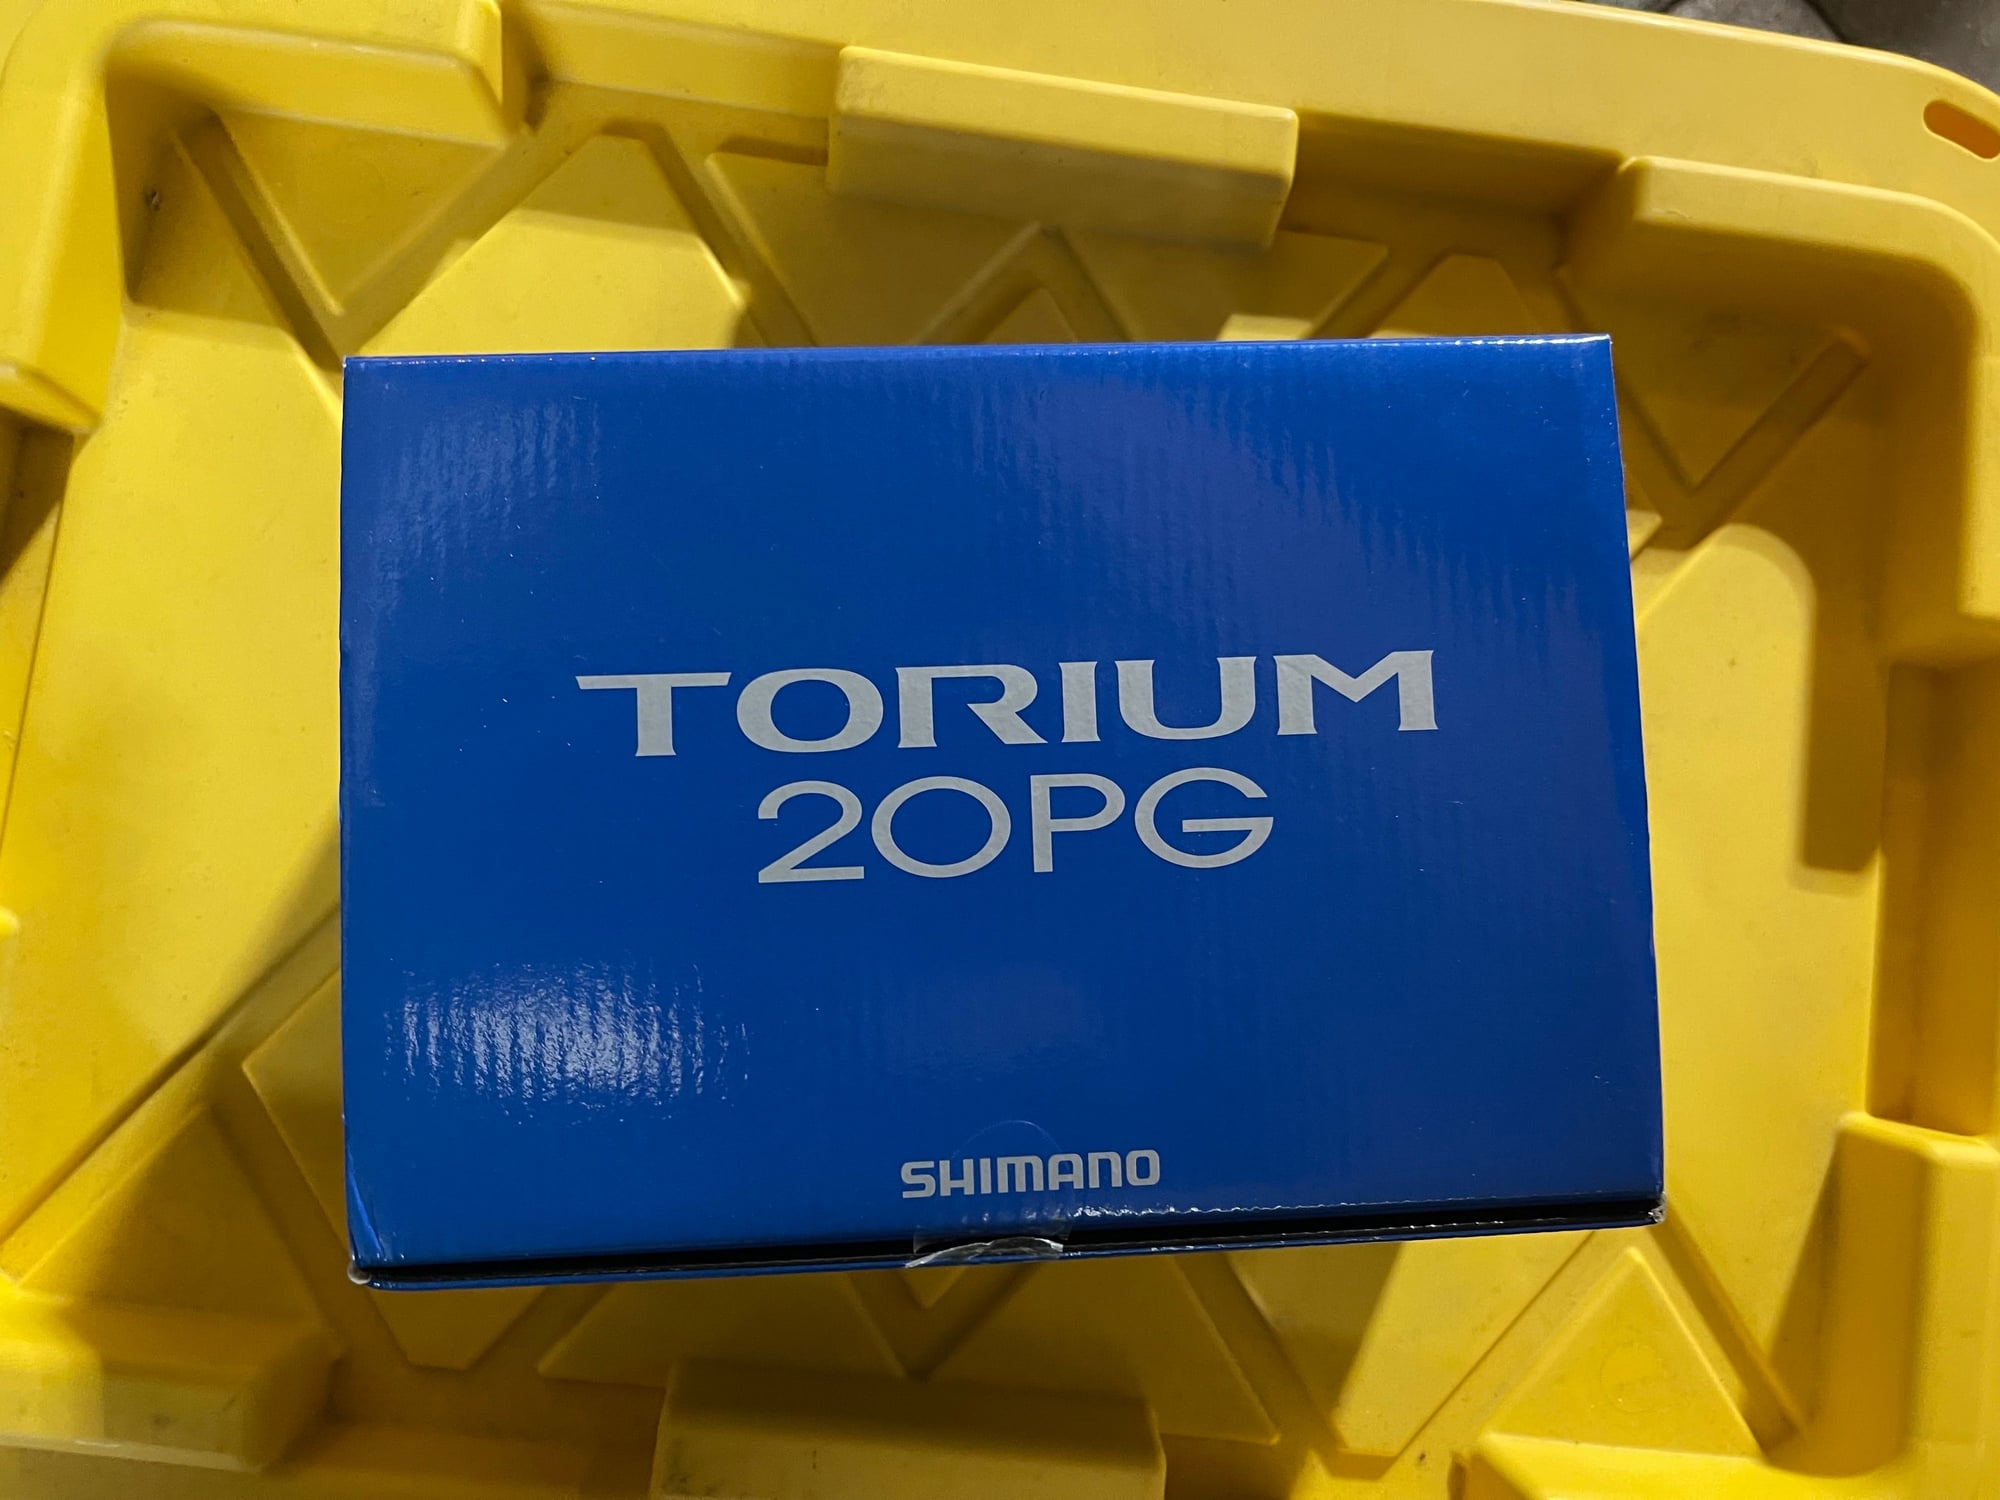 Shimano Torium 20 PG Brand New In Box + Reel Cover - The Hull